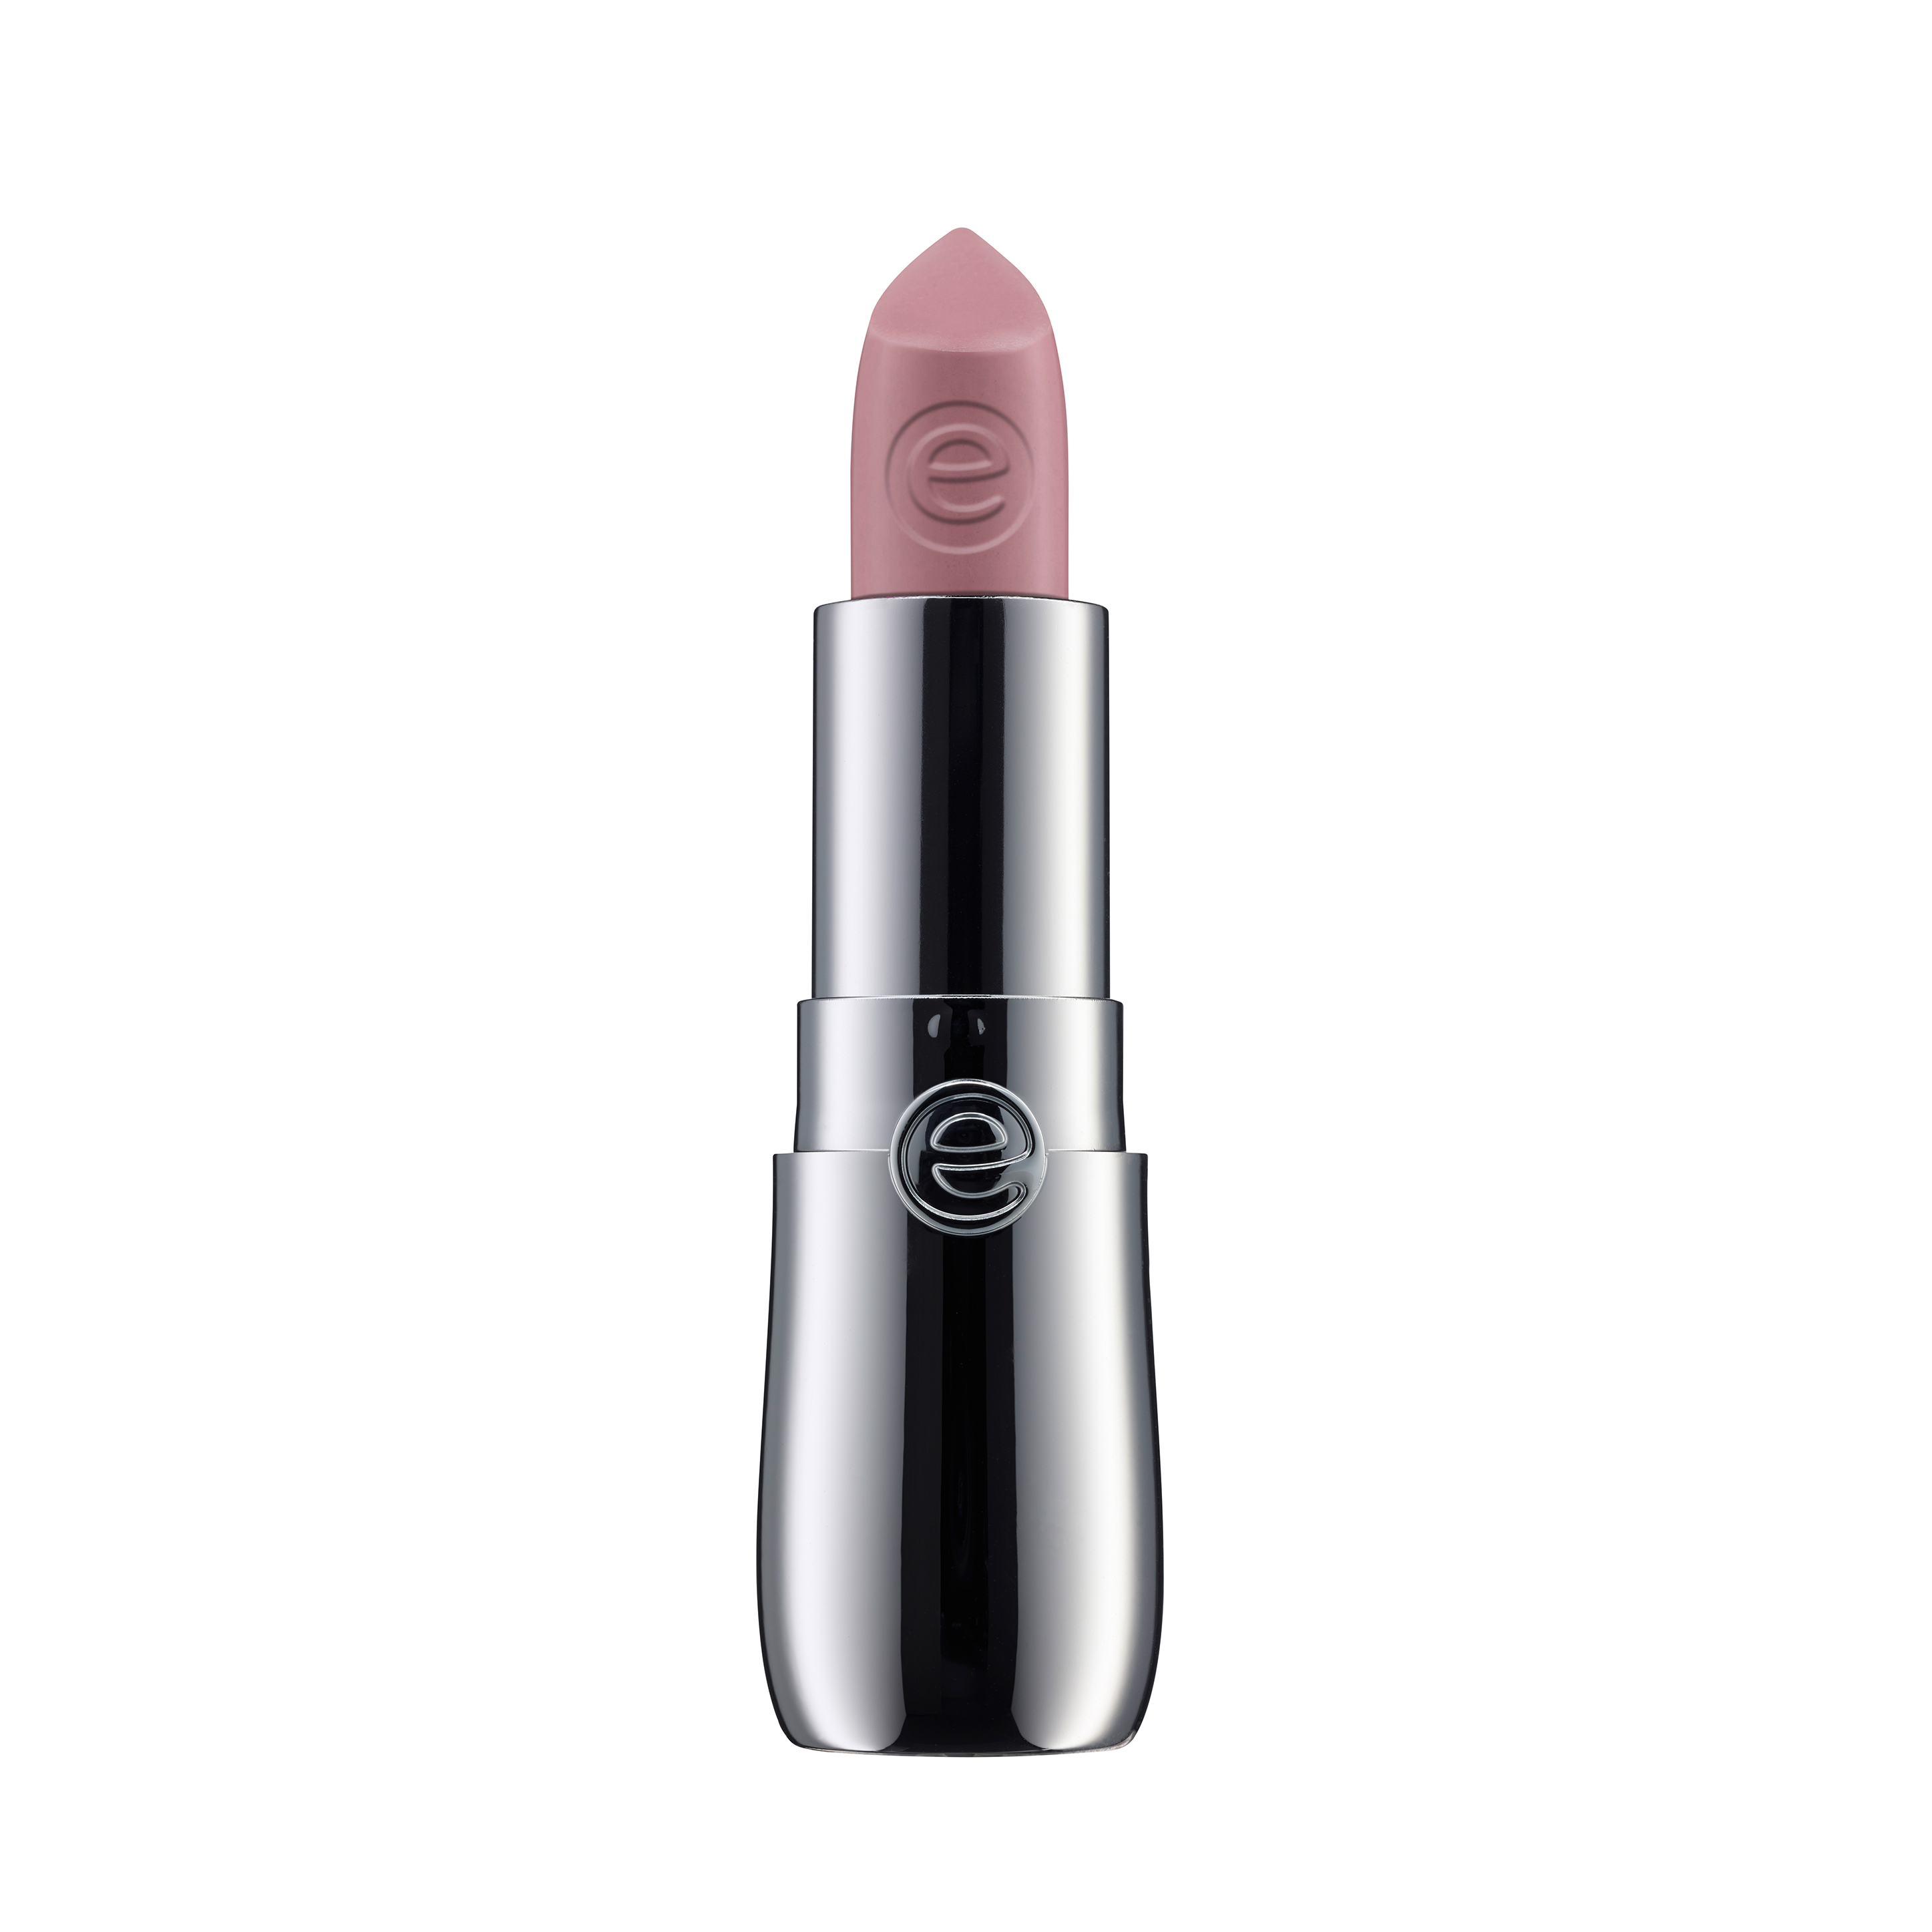 essence colour up! shine on! lipstick 11 - เอสเซนส์คัลเลอร์อัพ!ชายน์ออน!ลิปสติก 11